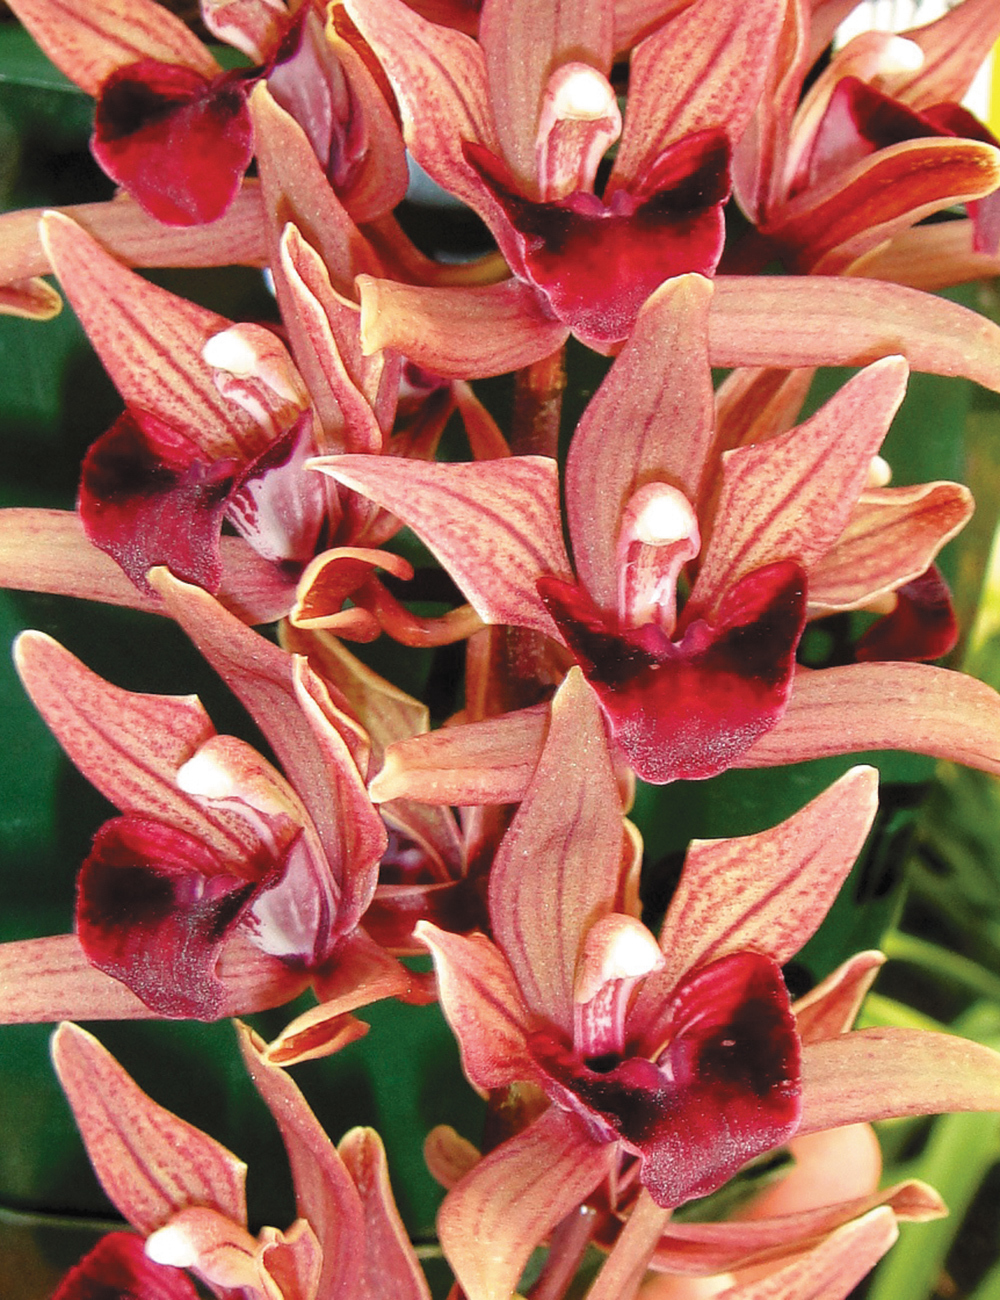 Cascading Cymbidium Orchids Gravy Train 'All Aboard'